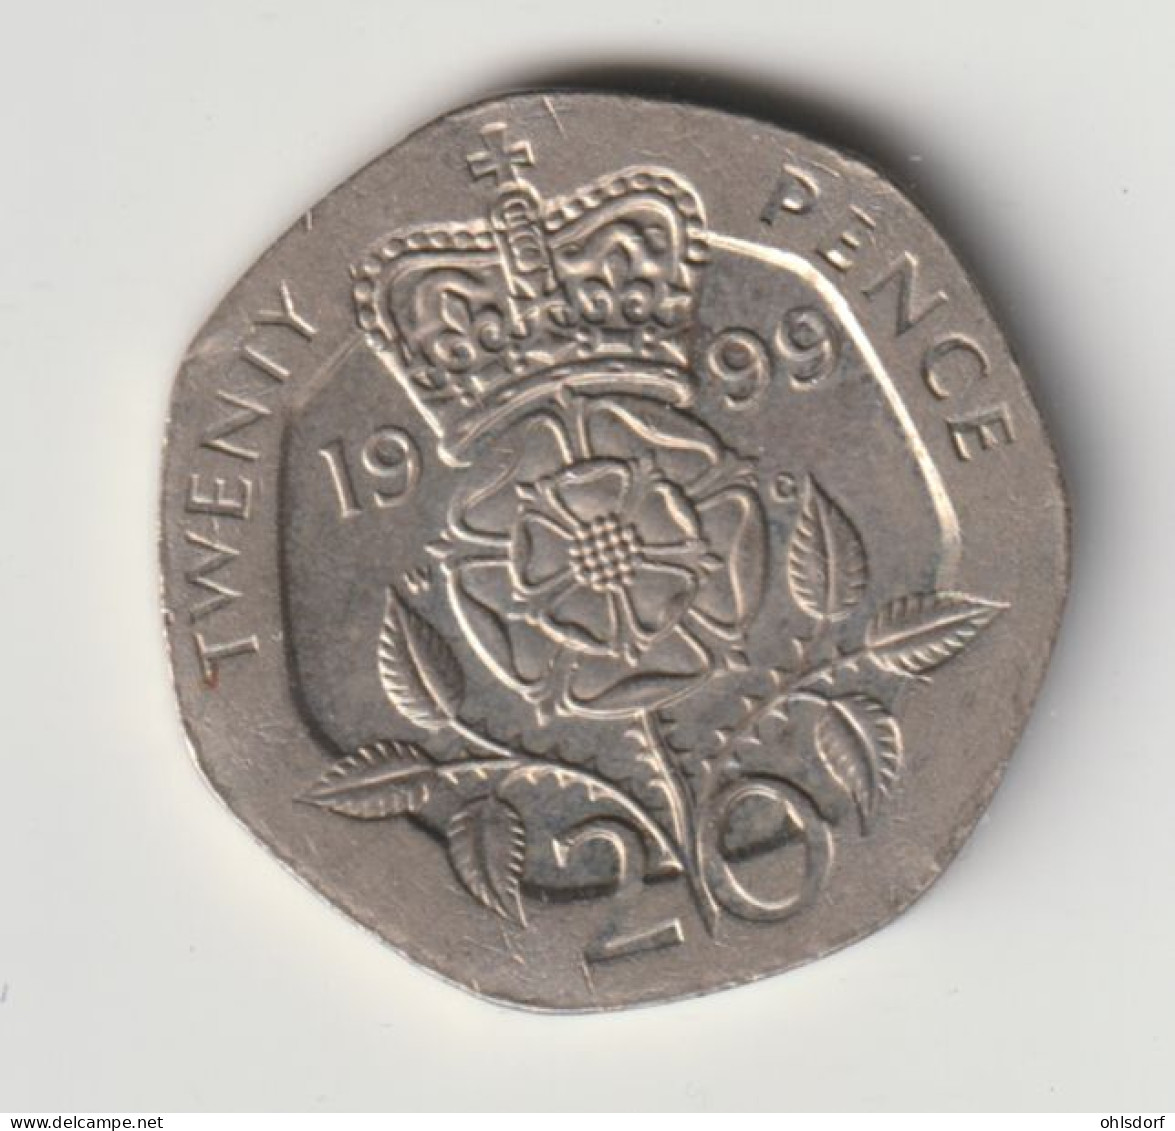 GREAT BRITAIN 1999: 20 Pence, KM 990 - 20 Pence